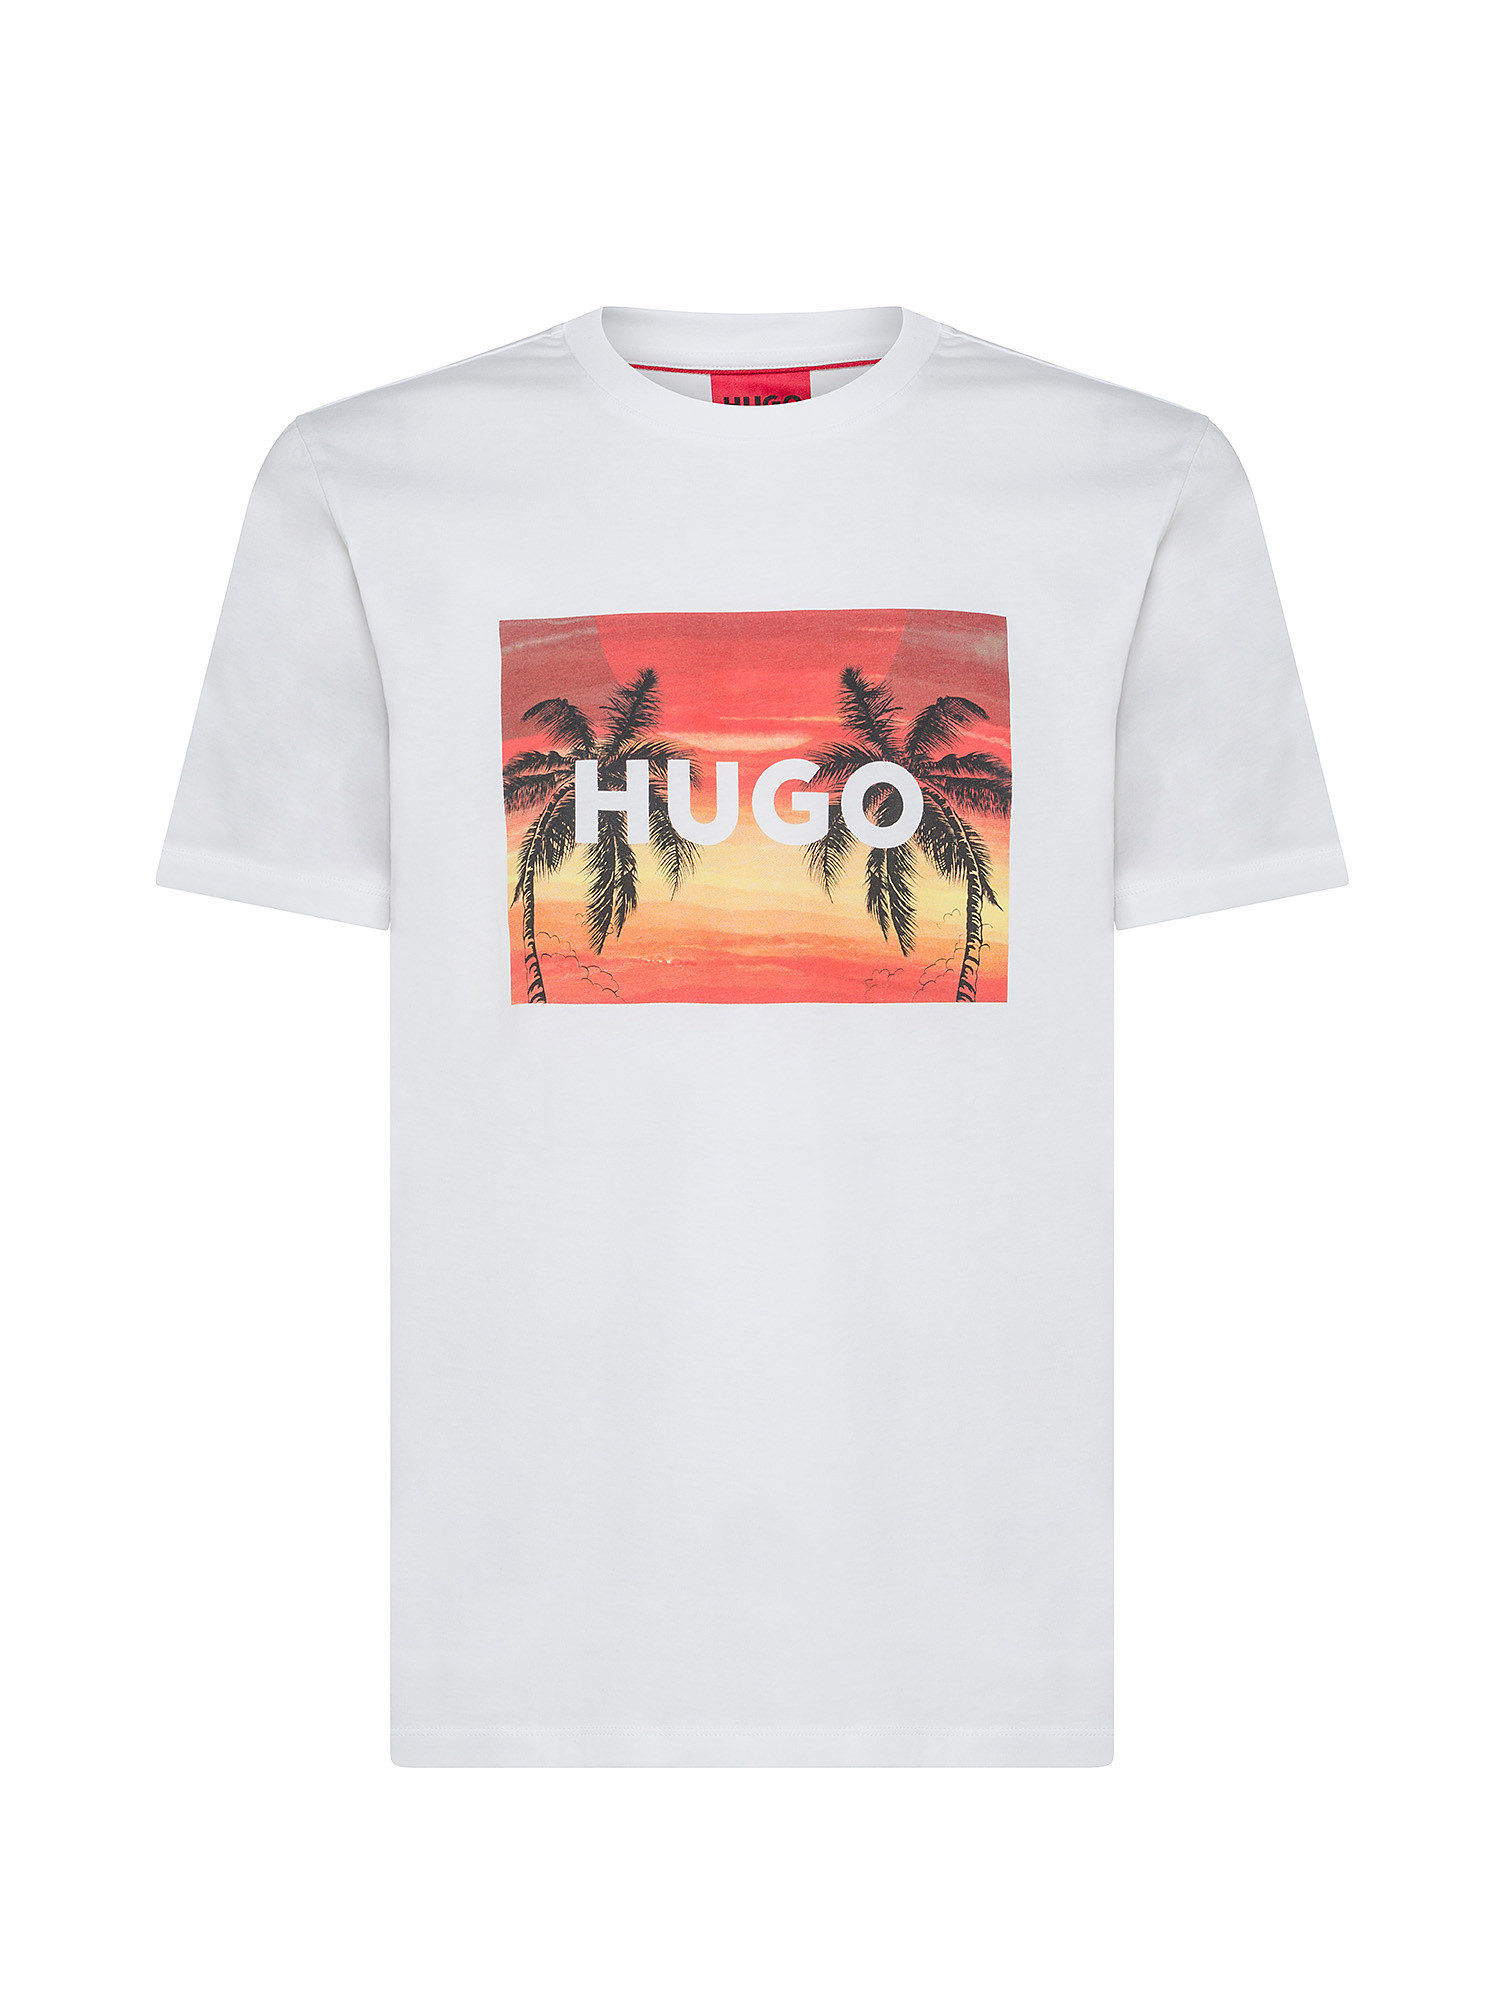 Hugo - Graphic print cotton t-shirt, White, large image number 0